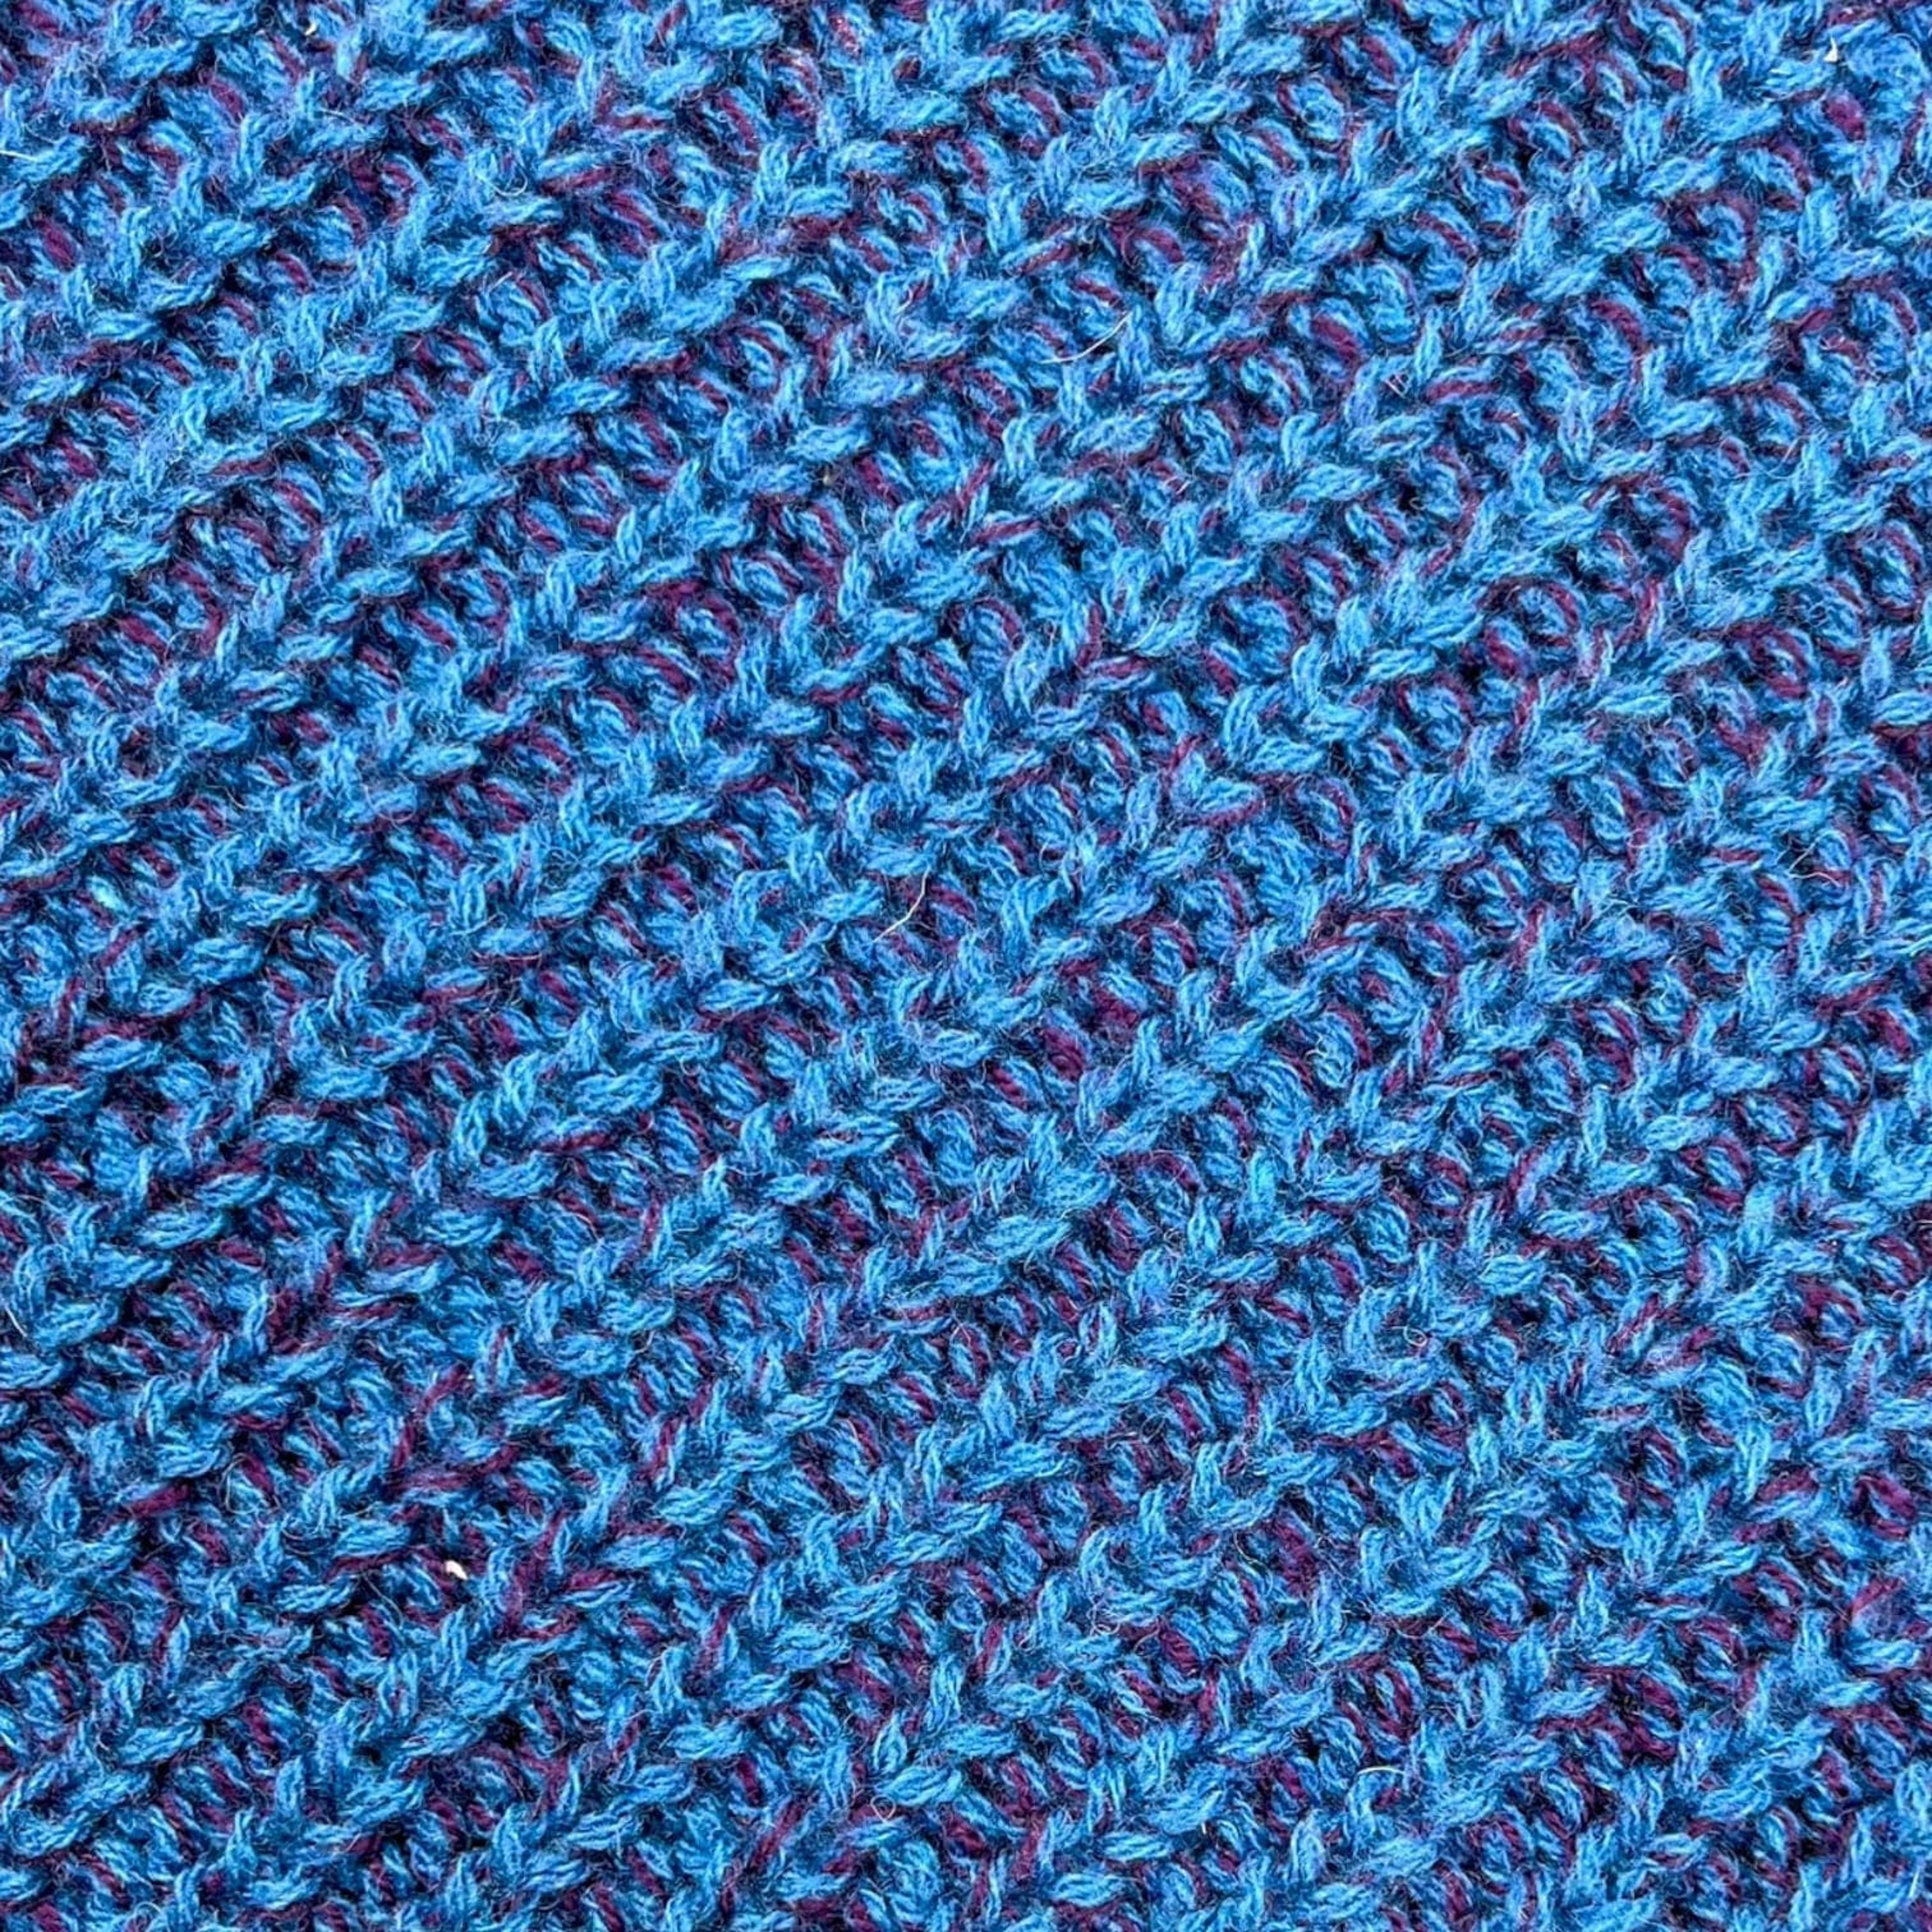 Alternate View 2 of Marni Gradient Effect Knitted Sweatshirt Purple Blue Pre-Owned